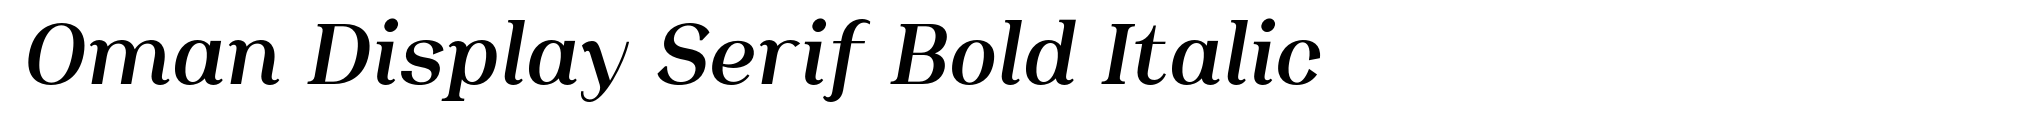 Oman Display Serif Bold Italic image